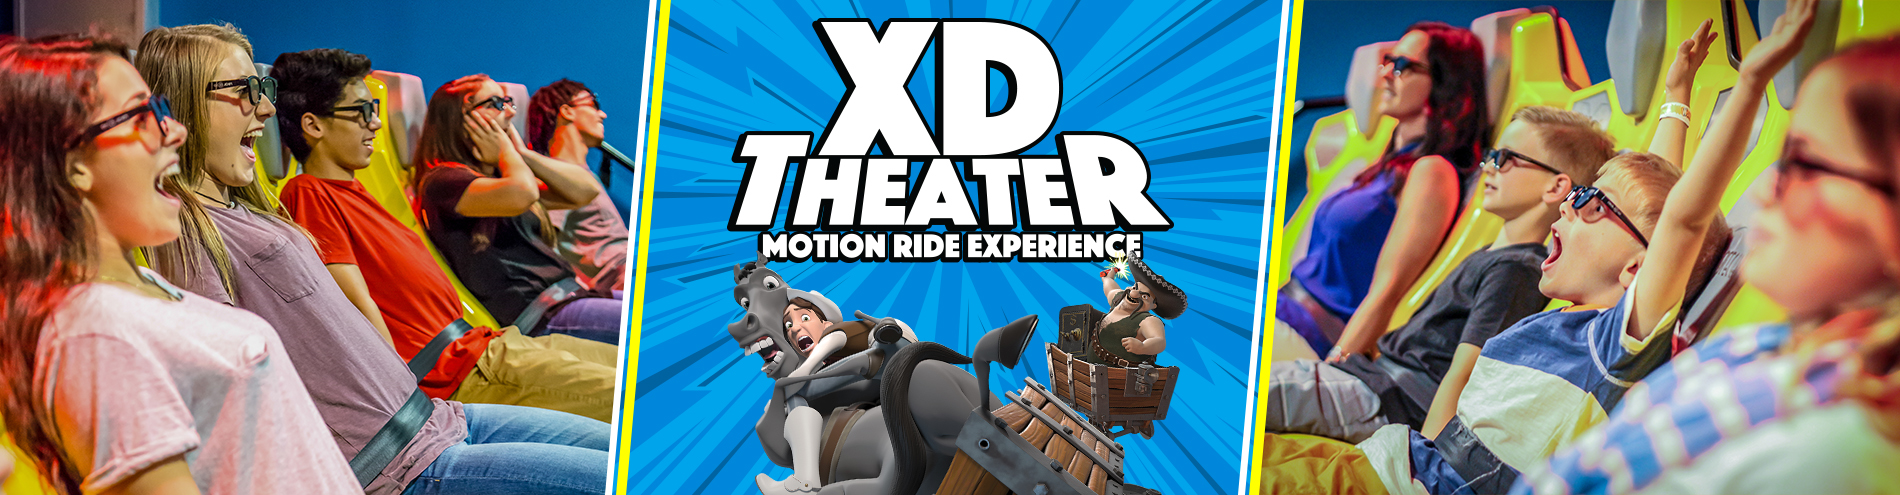 XD Theater Header